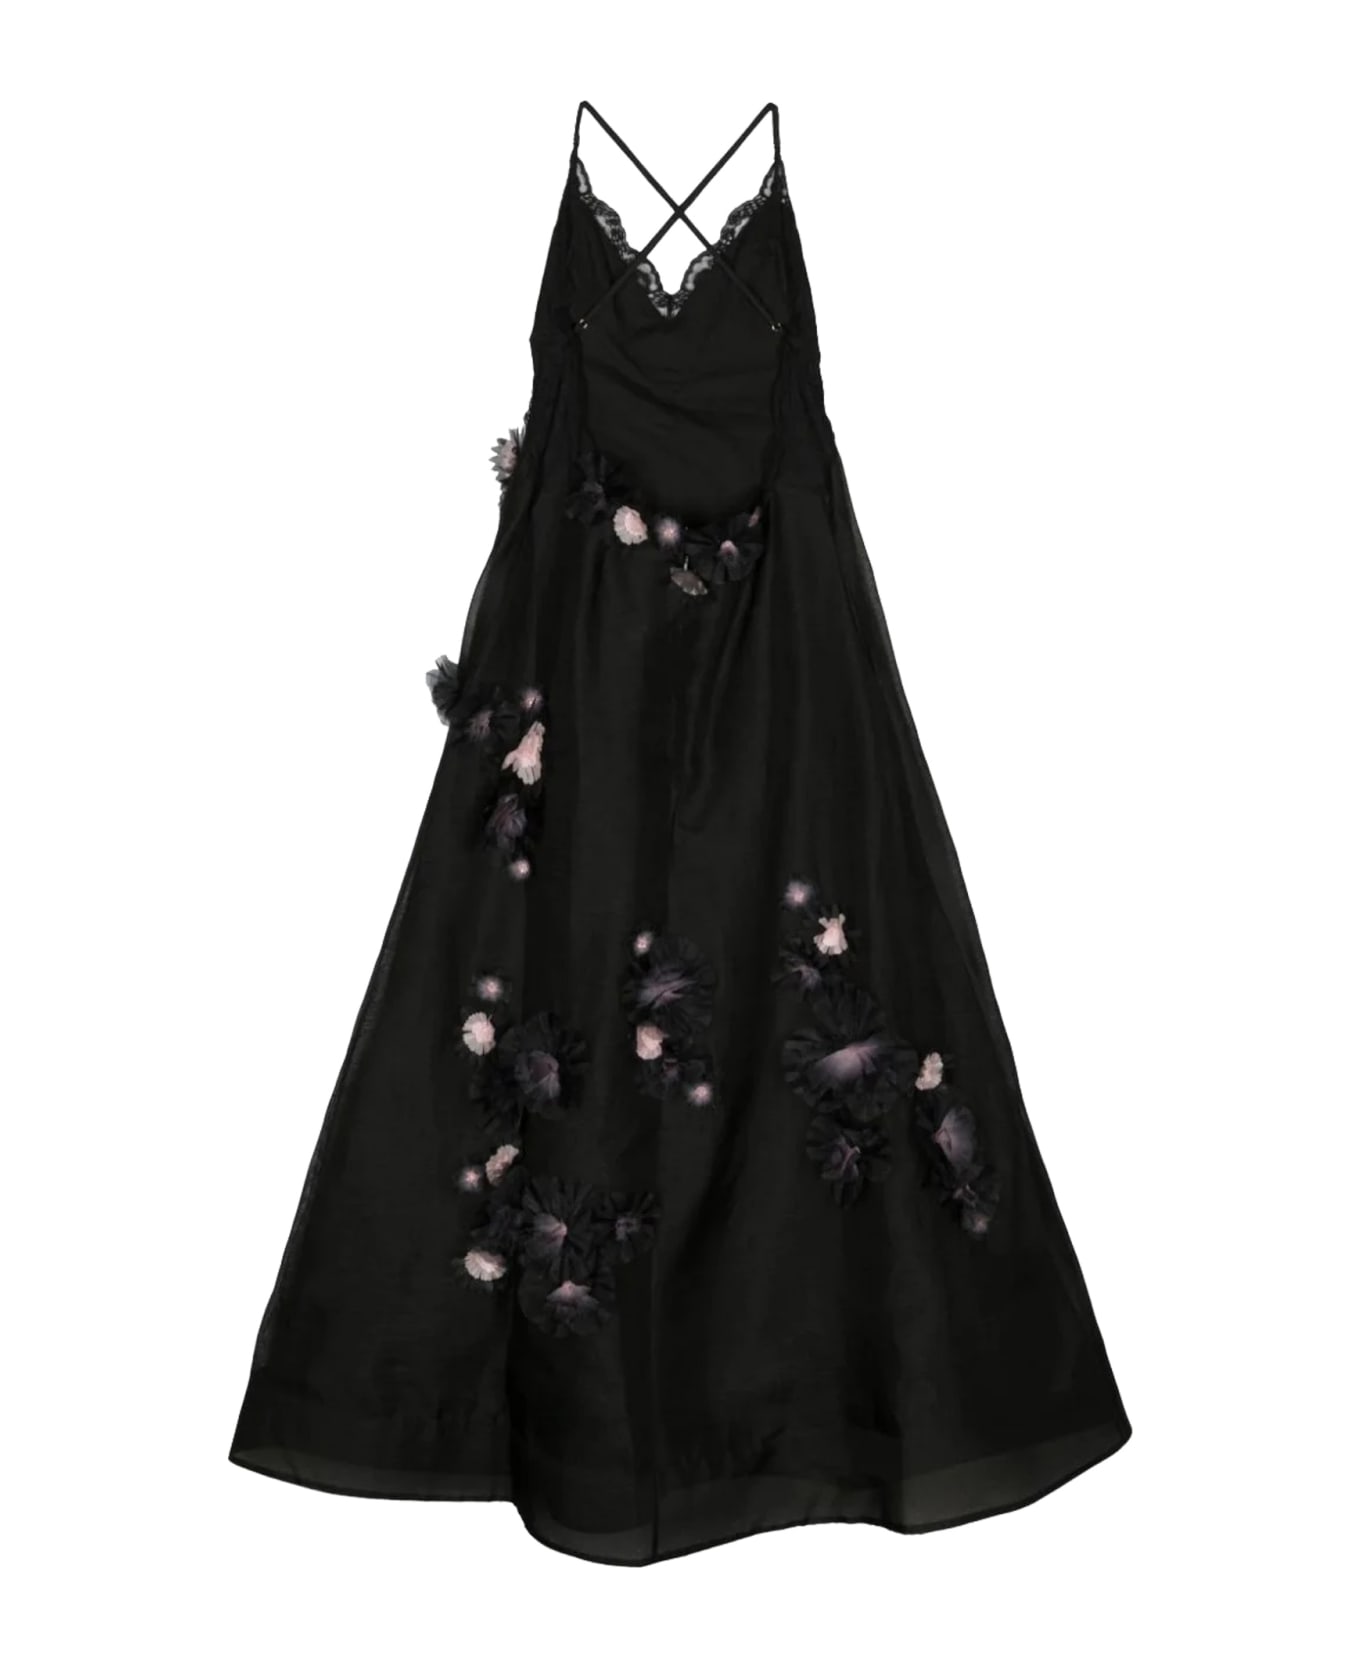 Zimmermann Dress - Black